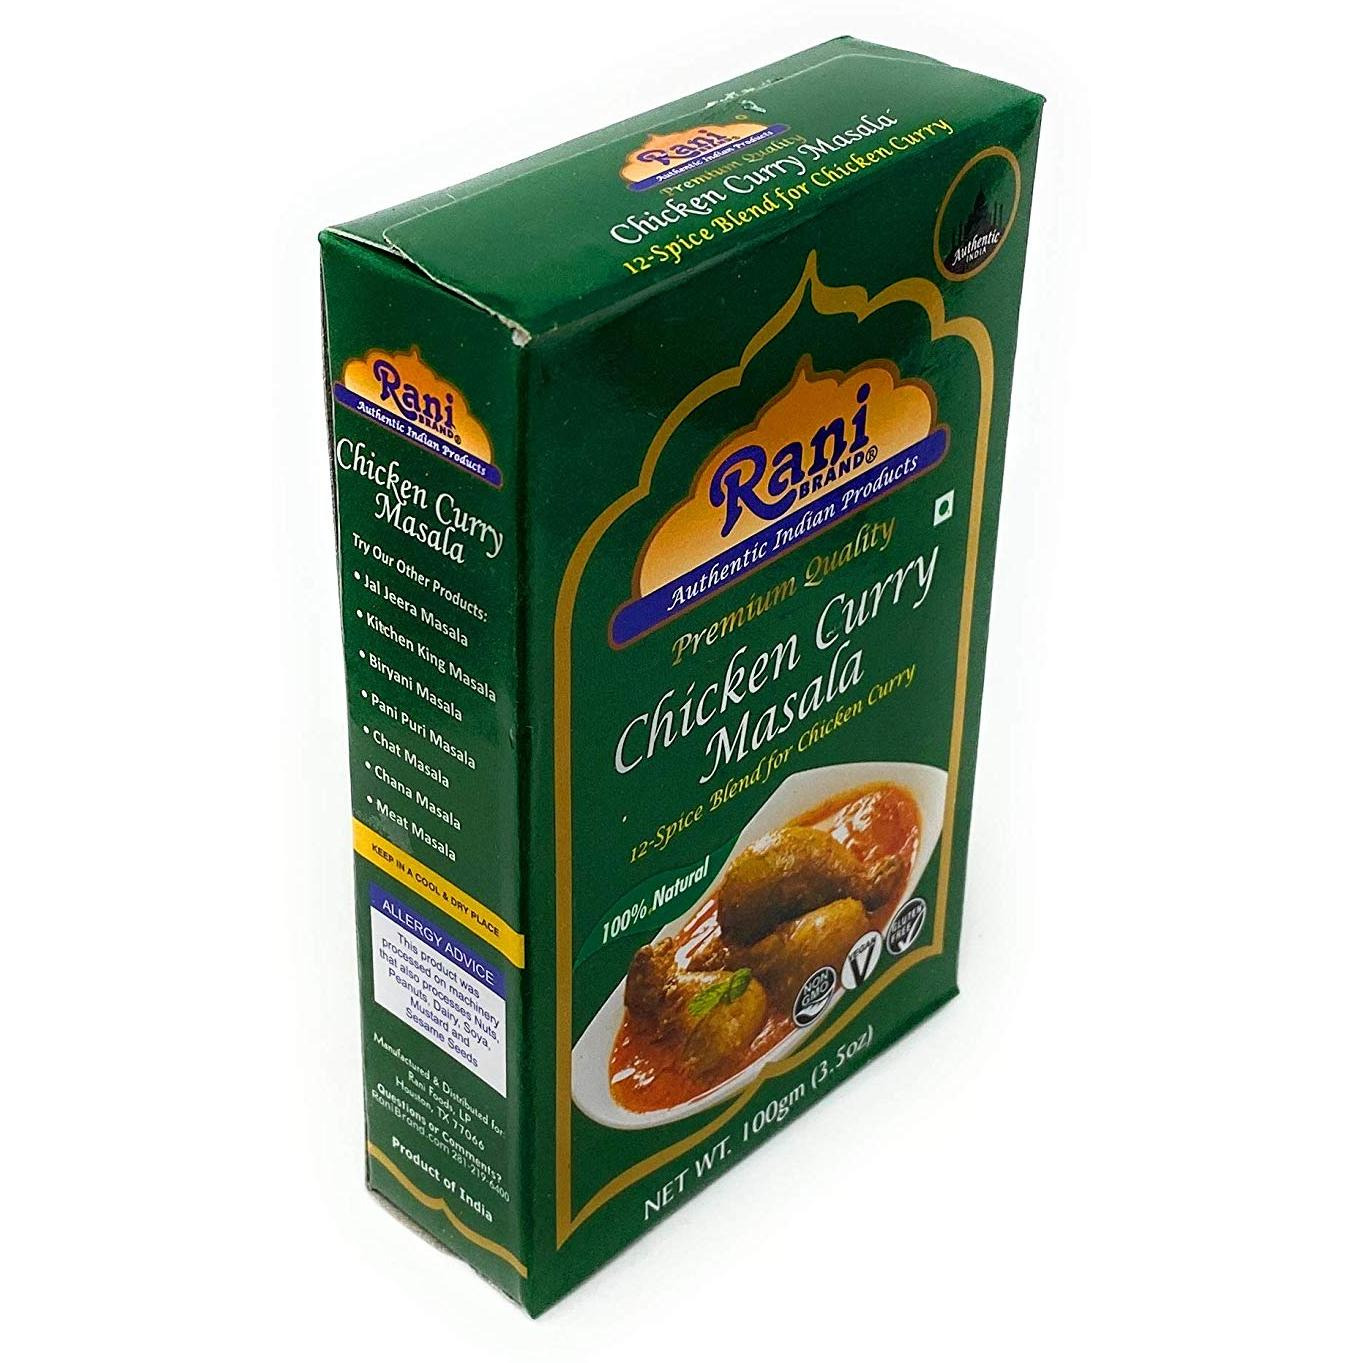 Rani Chicken Curry Masala (Indian 16-Spice Blend for Chicken) 3.5oz (100g) ~ All Natural | Vegan | No Colors | Gluten Friendly  | NON-GMO | Indian Origin